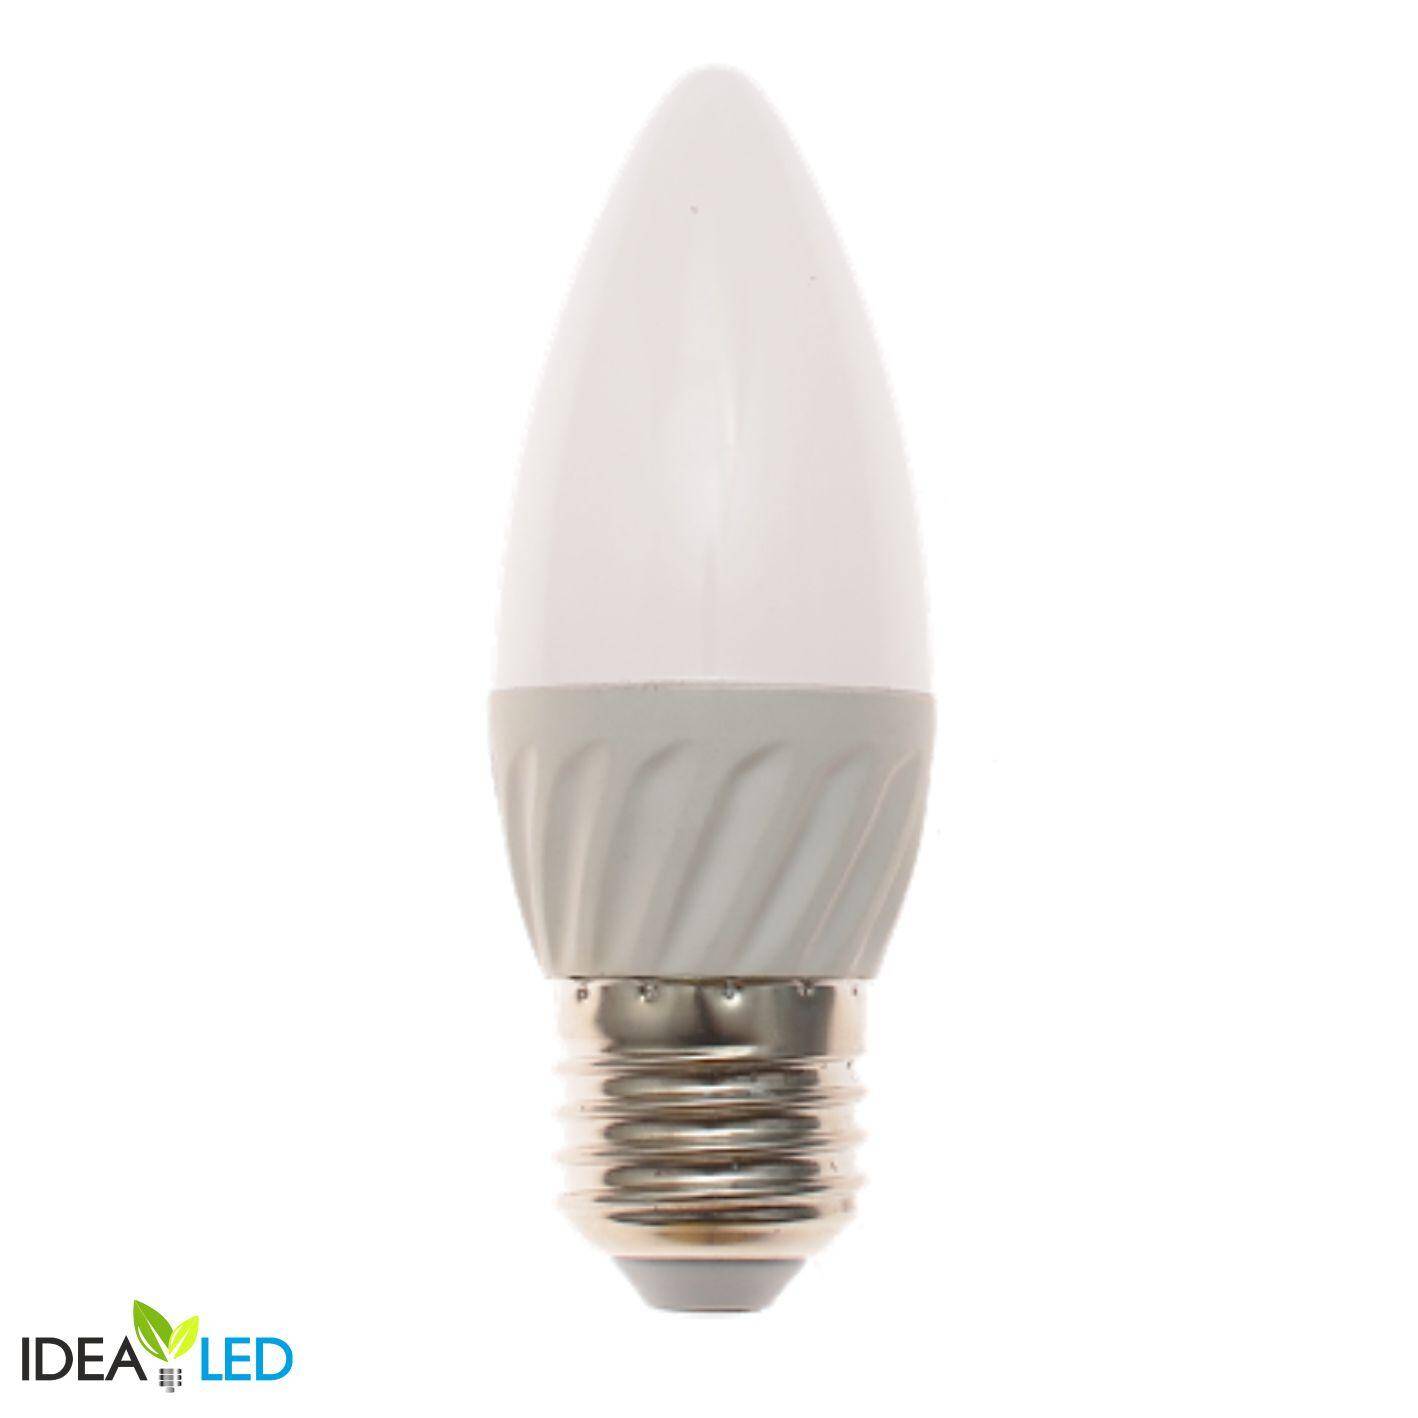 LED bulb SMD 2835 E27 candle 4W - warm white